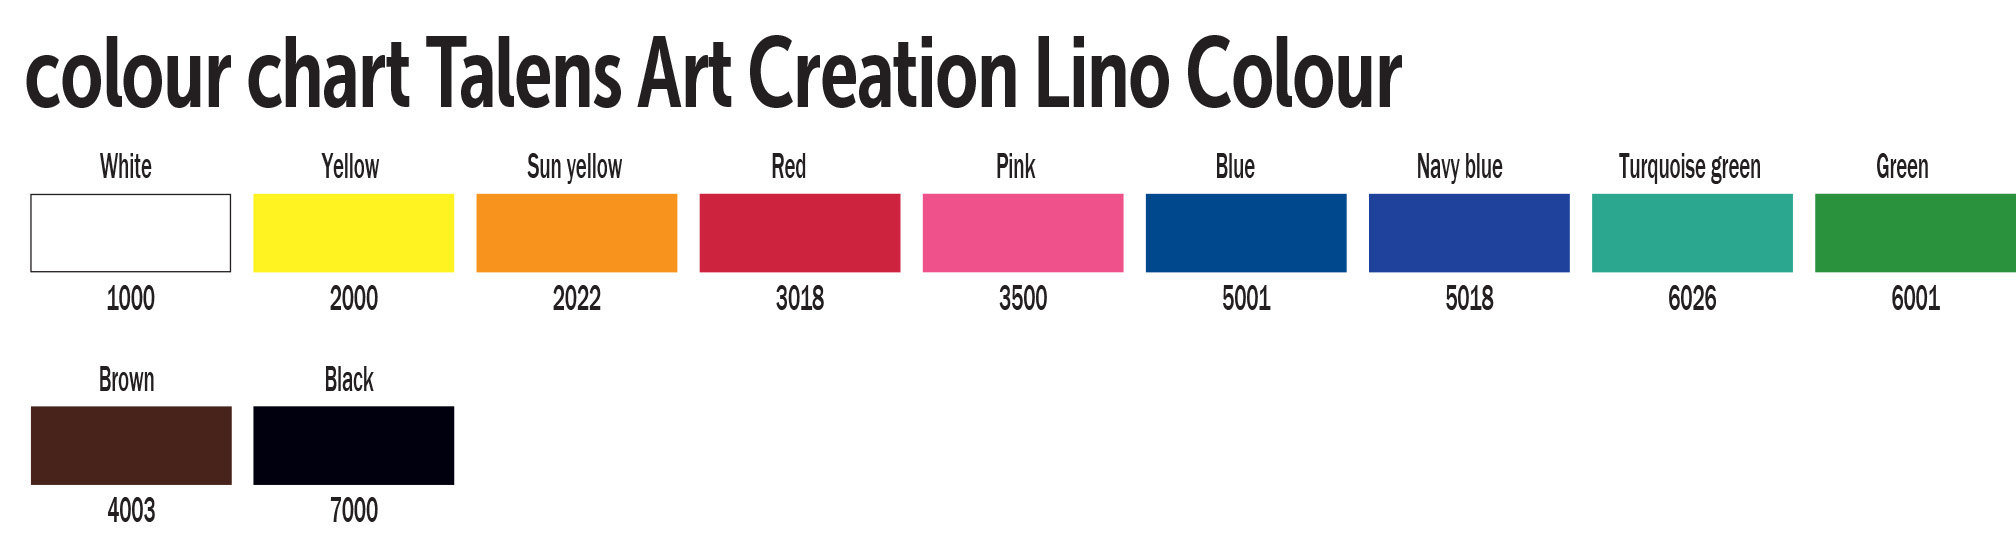 TAC Lino colour chart